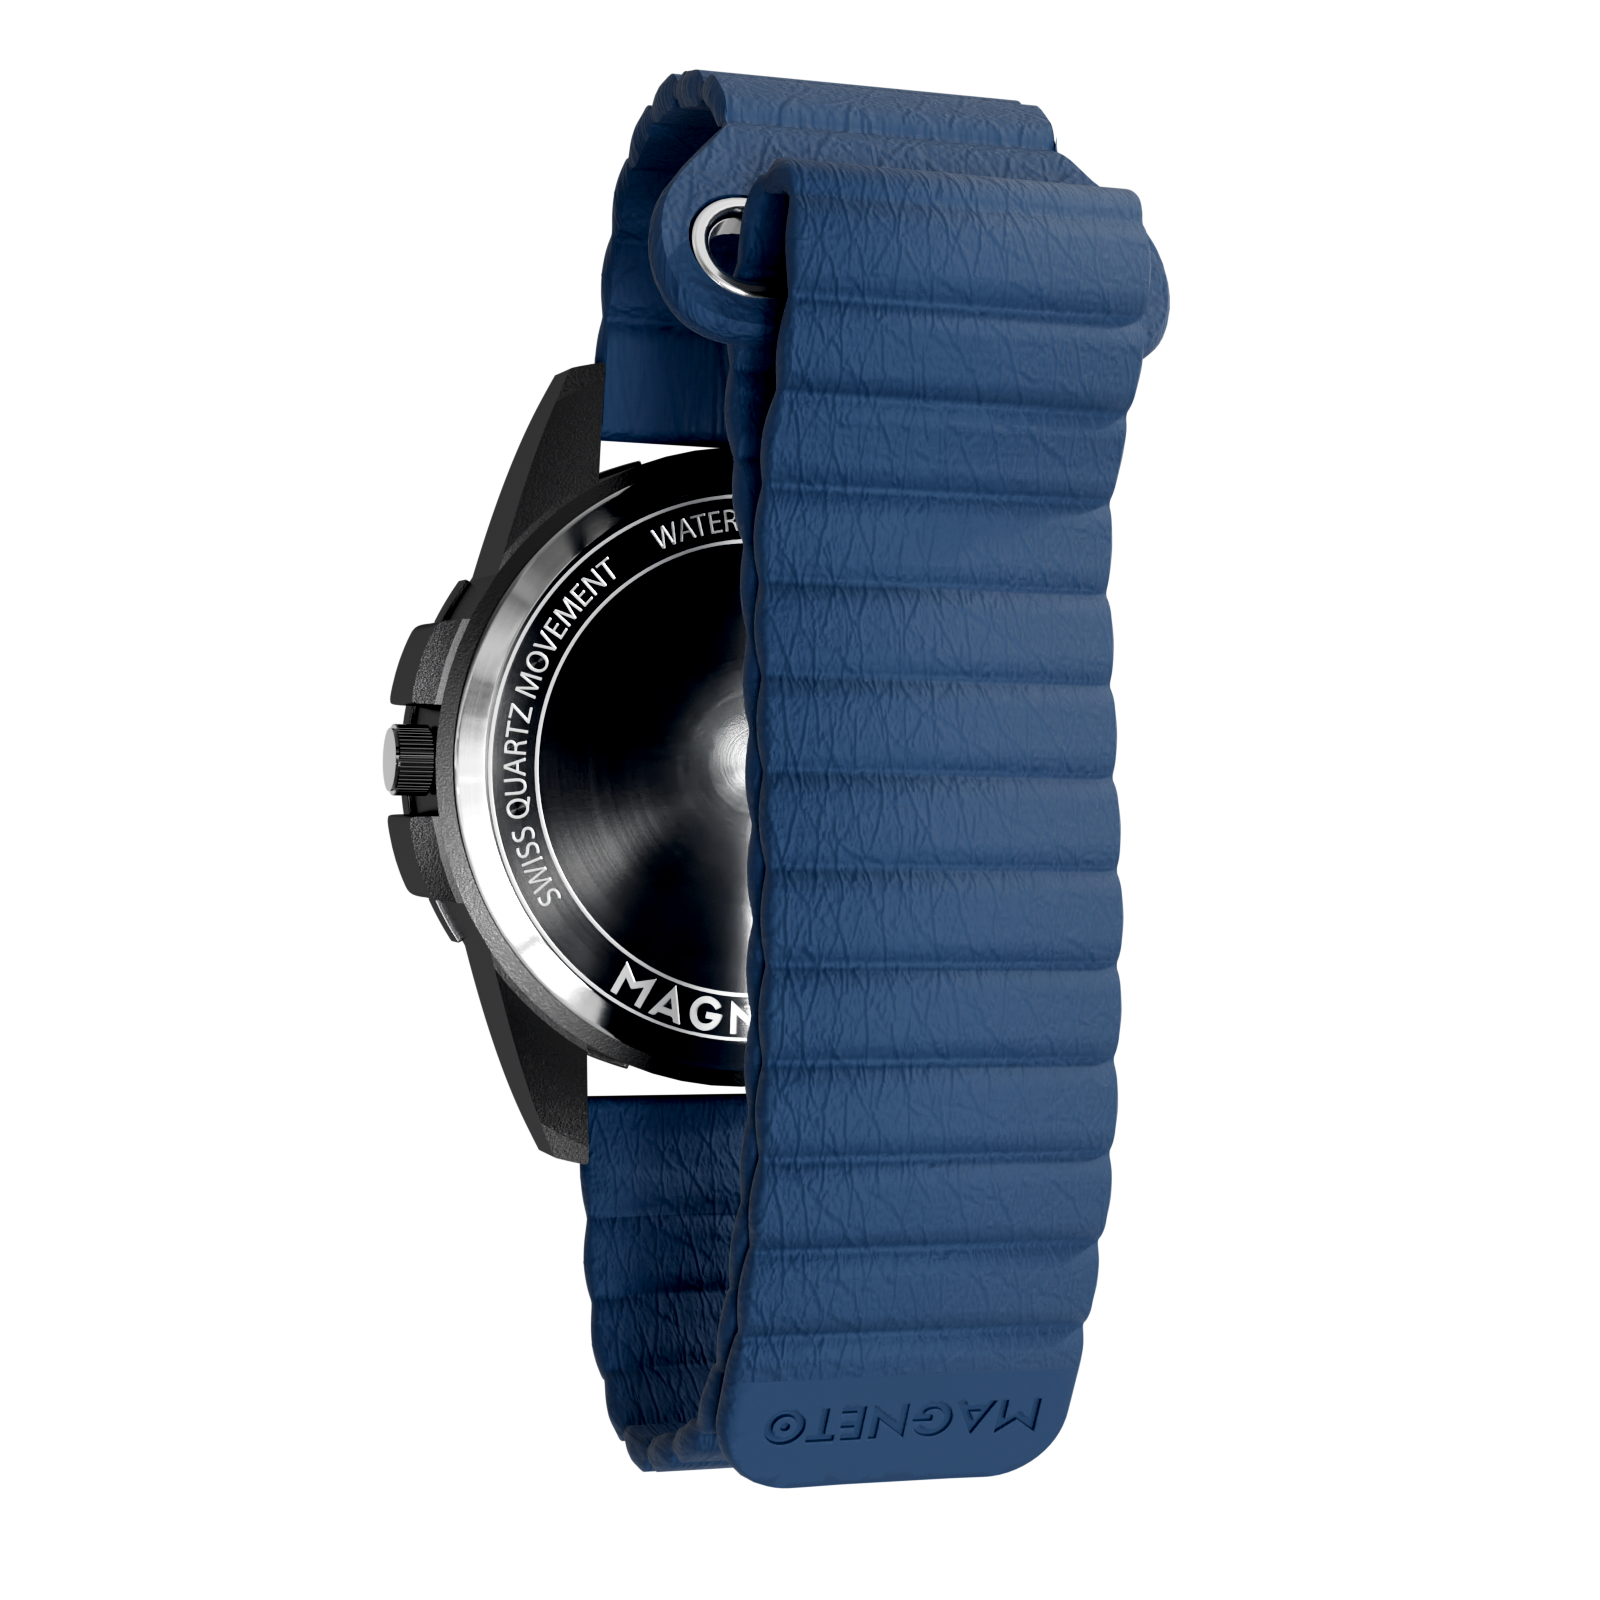 Dropshipping EUTOUR Black Metal Magnetic Watch Men Sports Quartz Men's  Fashion Watch Waterproof Mens Wristwatch Male Clock 2021